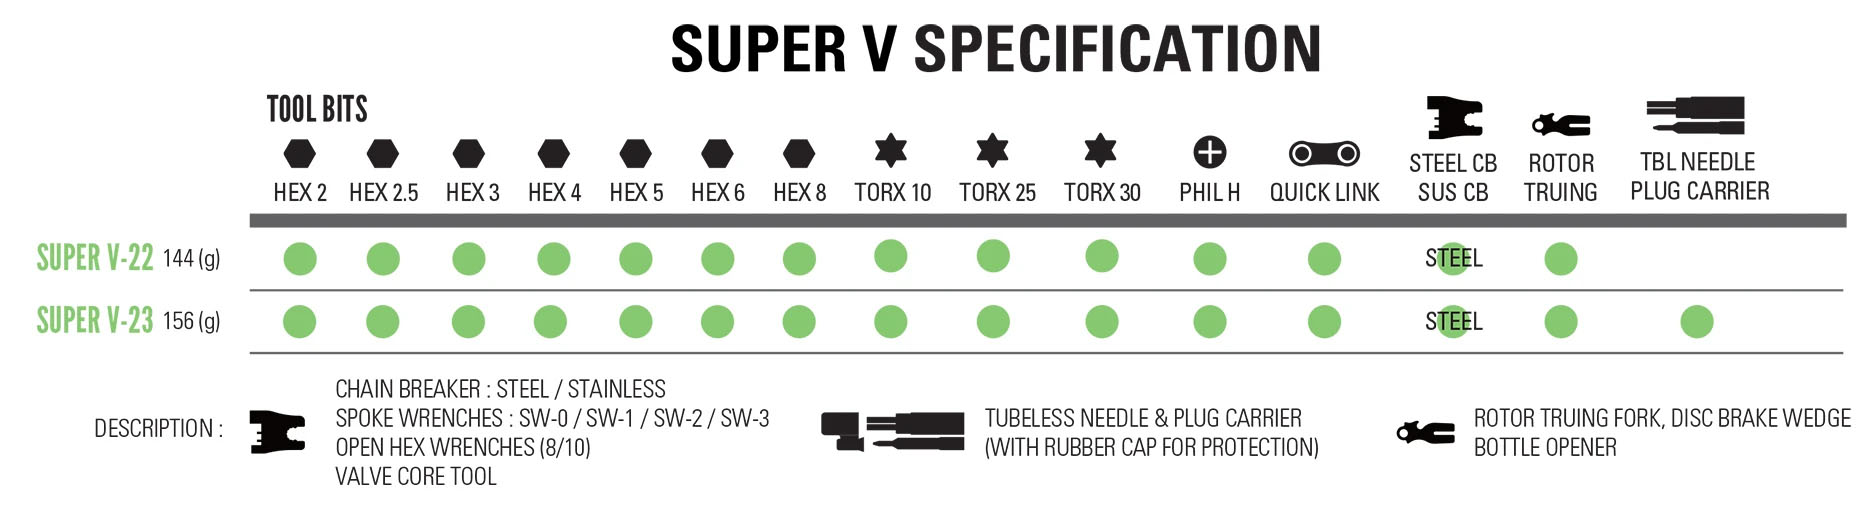 Super V tool chart